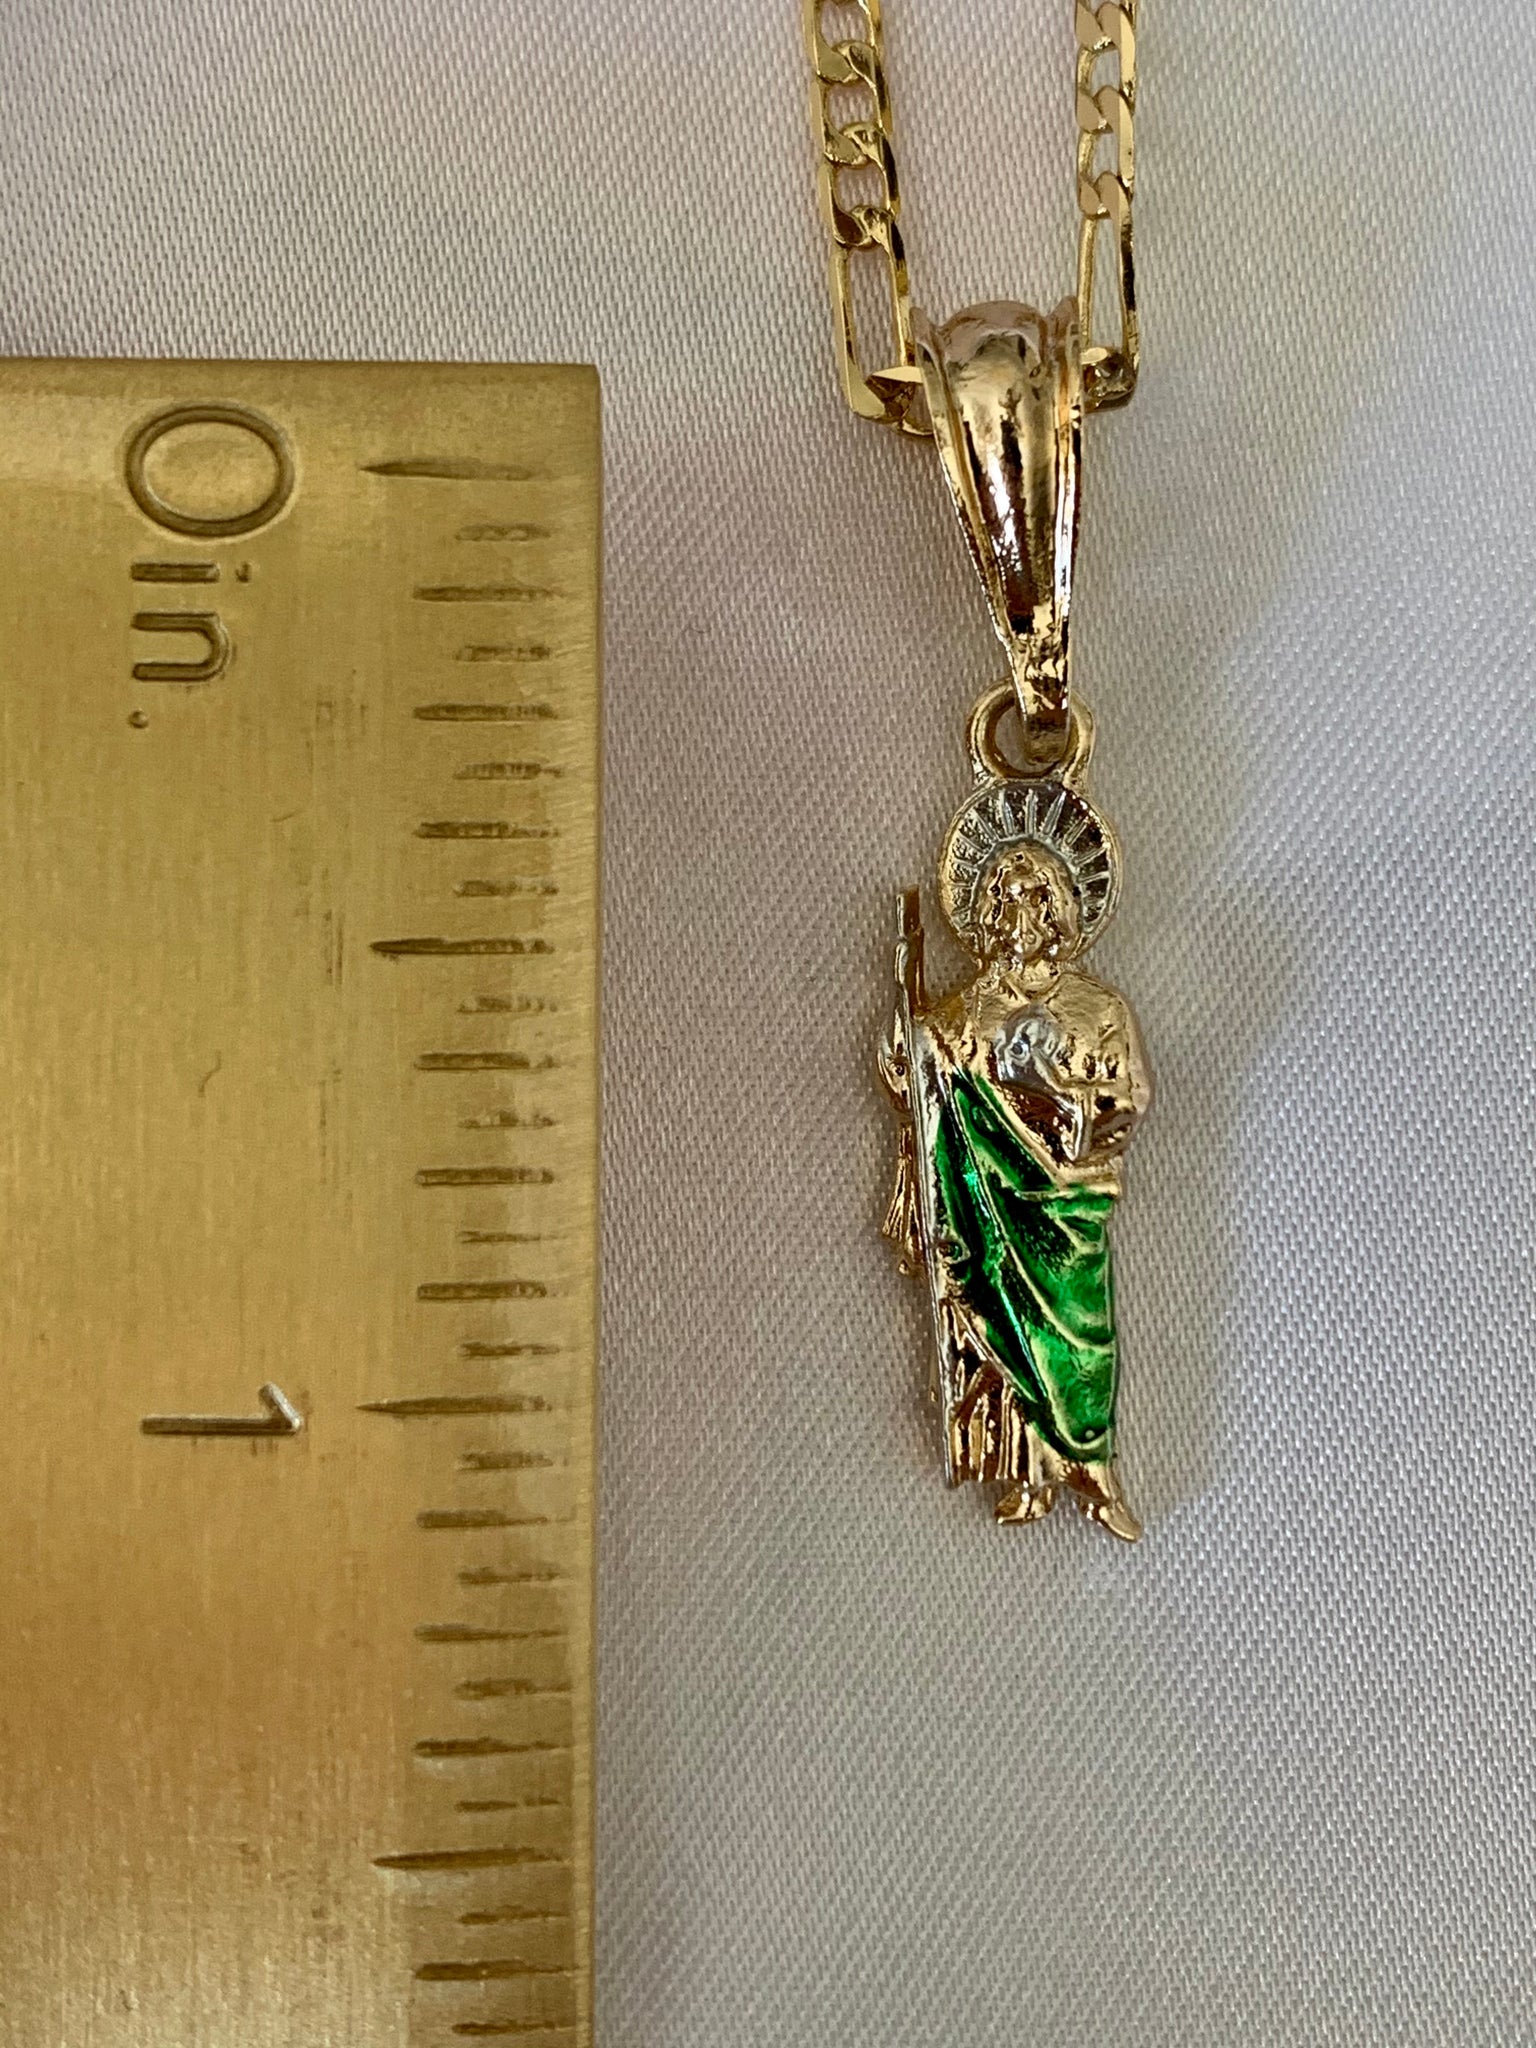 BeTime San Judas Tadeo Necklace: 18K Gold Plated San Judas Tadeo Pendant  Jewelry for Men | Amazon.com